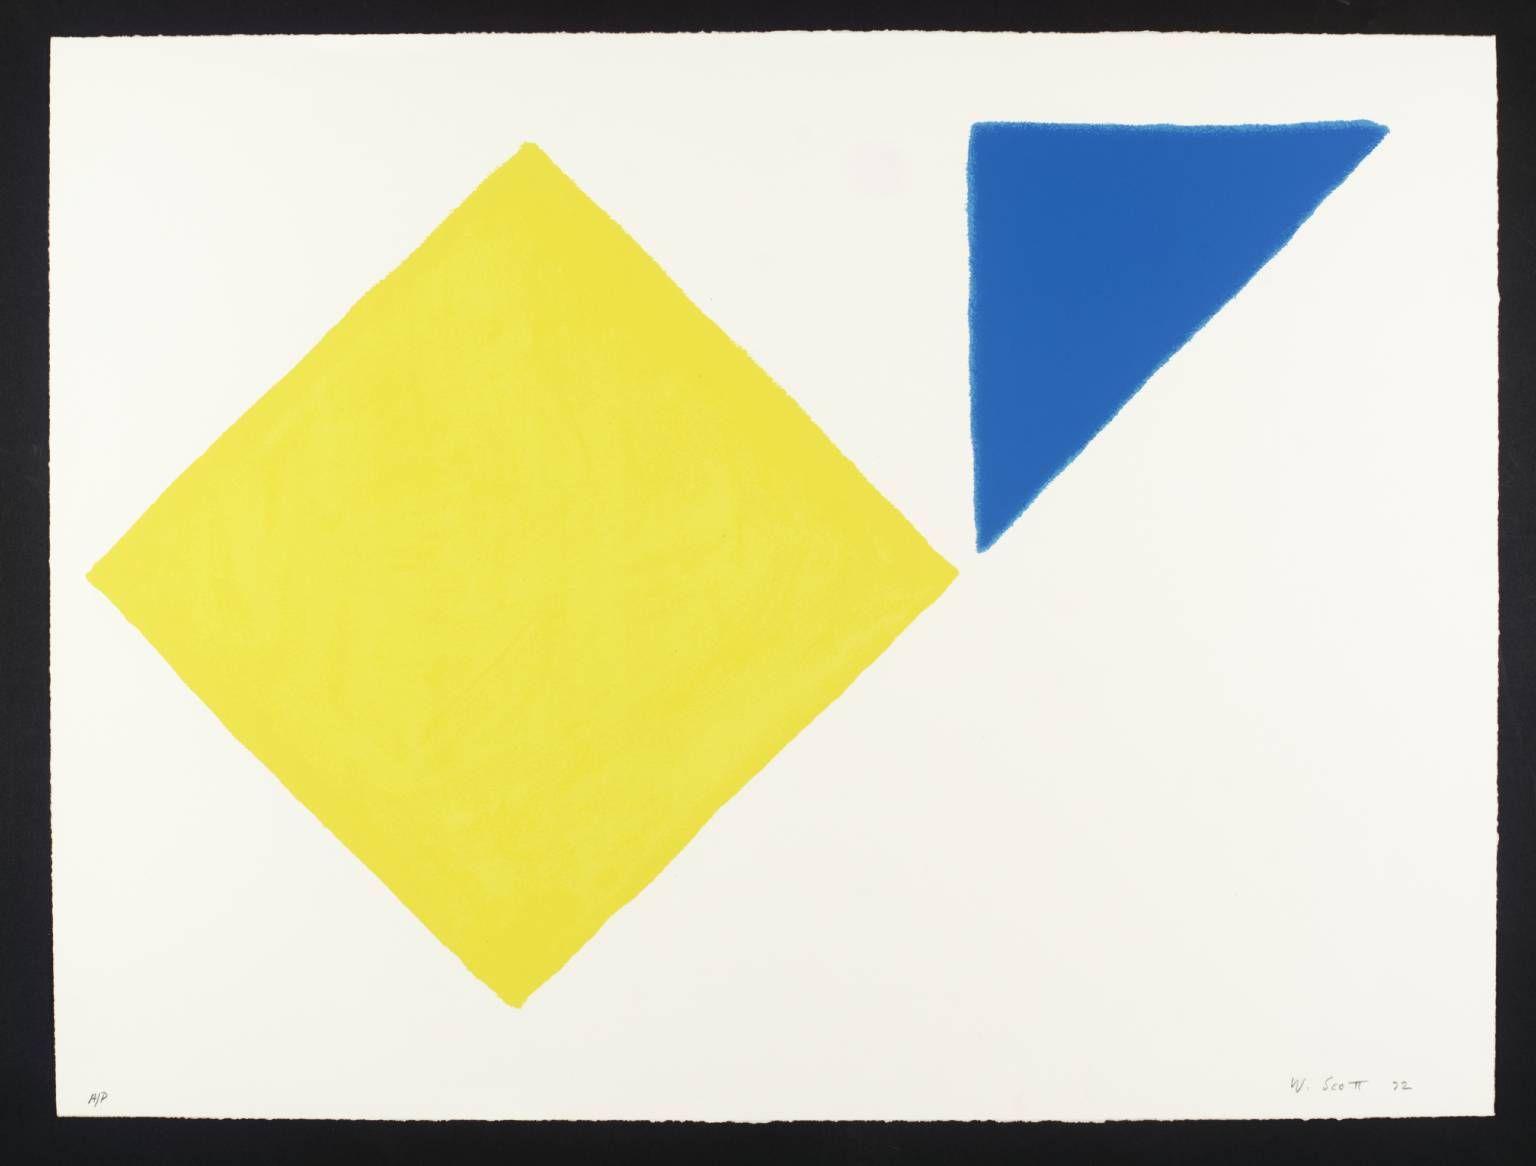 Blue and Yellow Square Logo - Yellow Square plus Quarter Blue', William Scott, 1972 | Tate